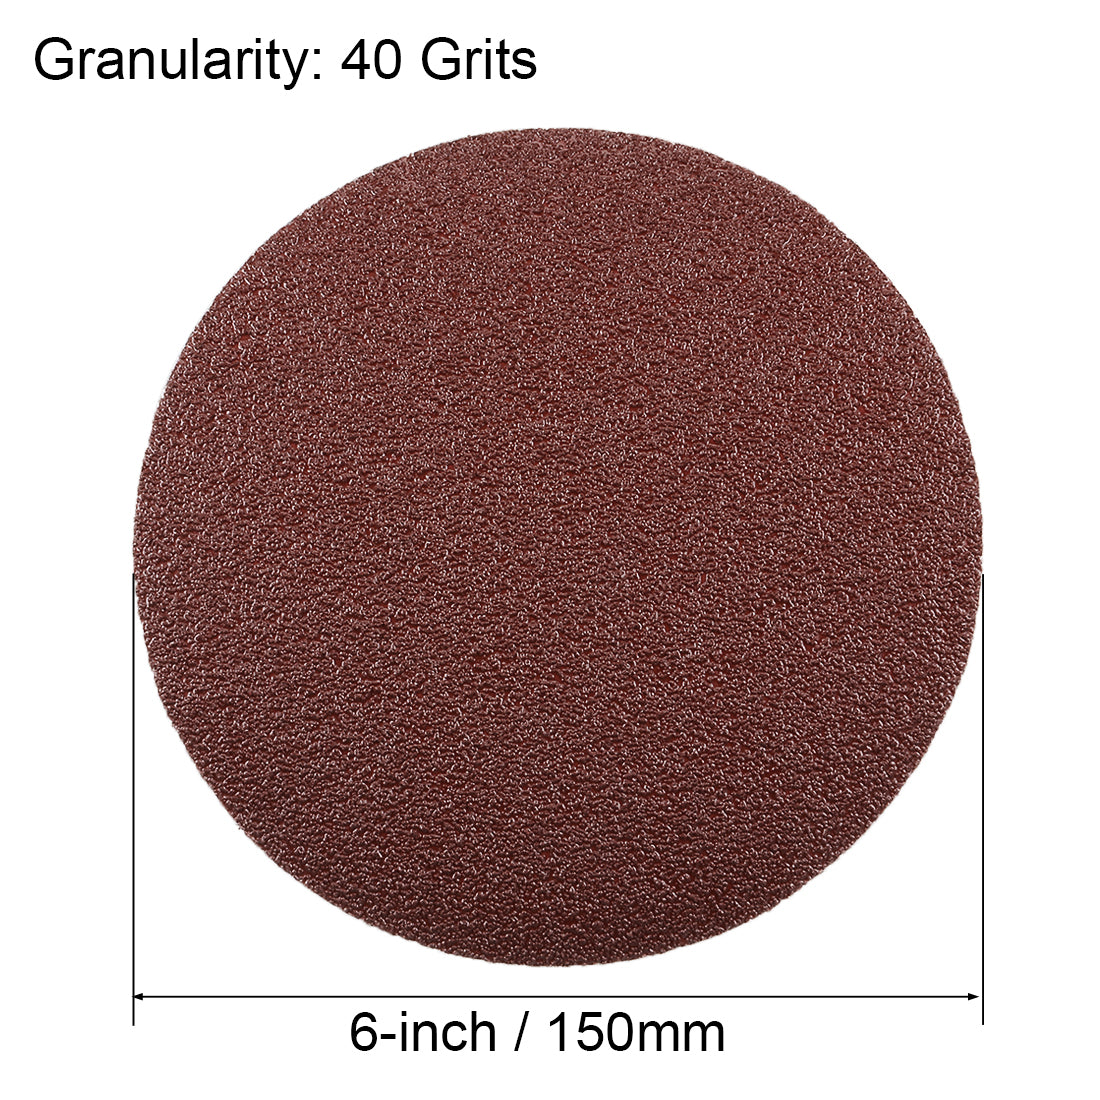 uxcell Uxcell 6-inch 40-Grits PSA Sanding Disc, Adhesive-Backed Sanding Sheets Aluminum Oxide Sandpaper for Random Orbital Sander 10pcs